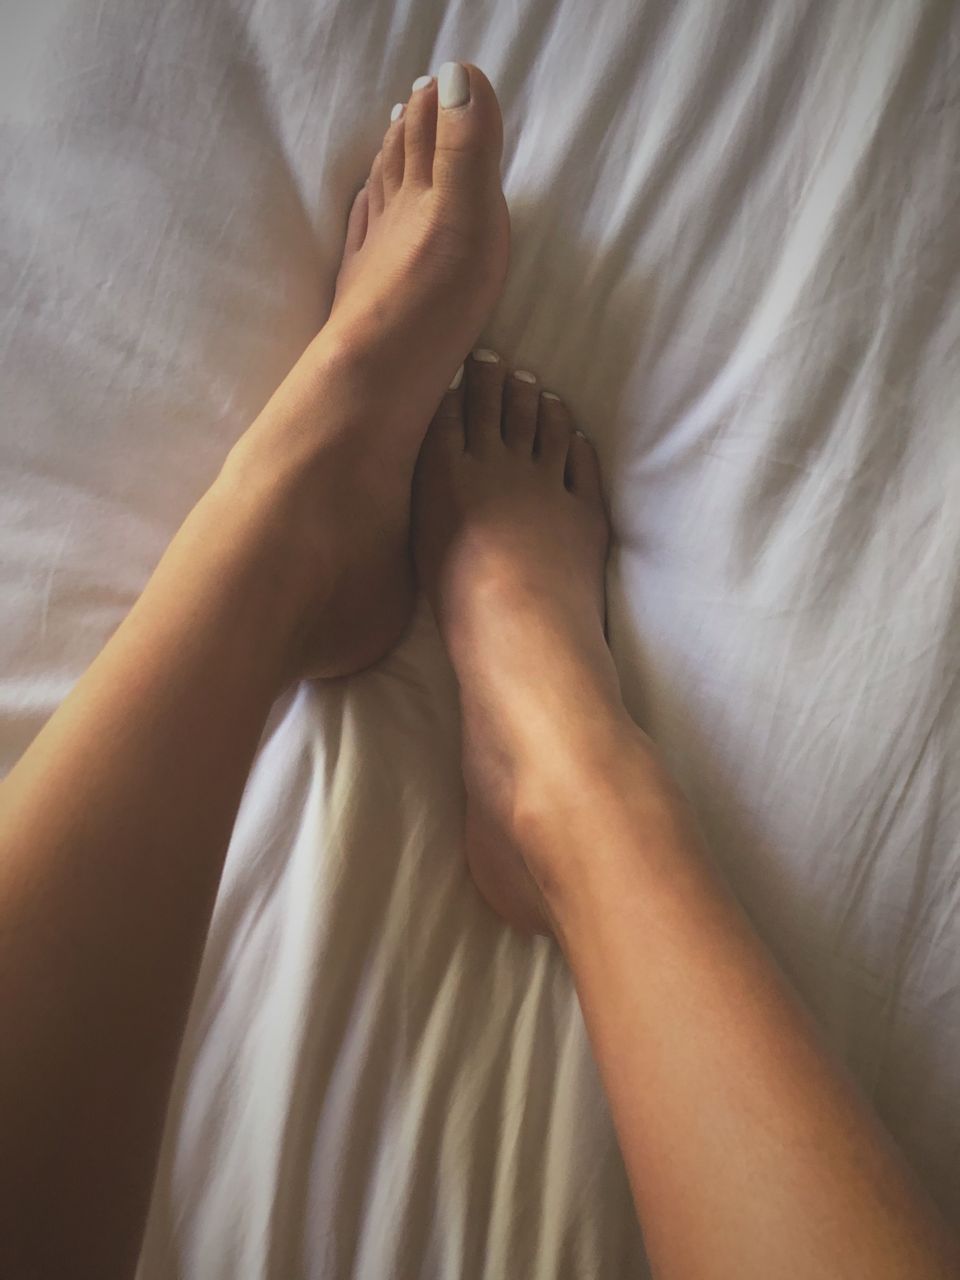 M Got Nice Feet Good Morning